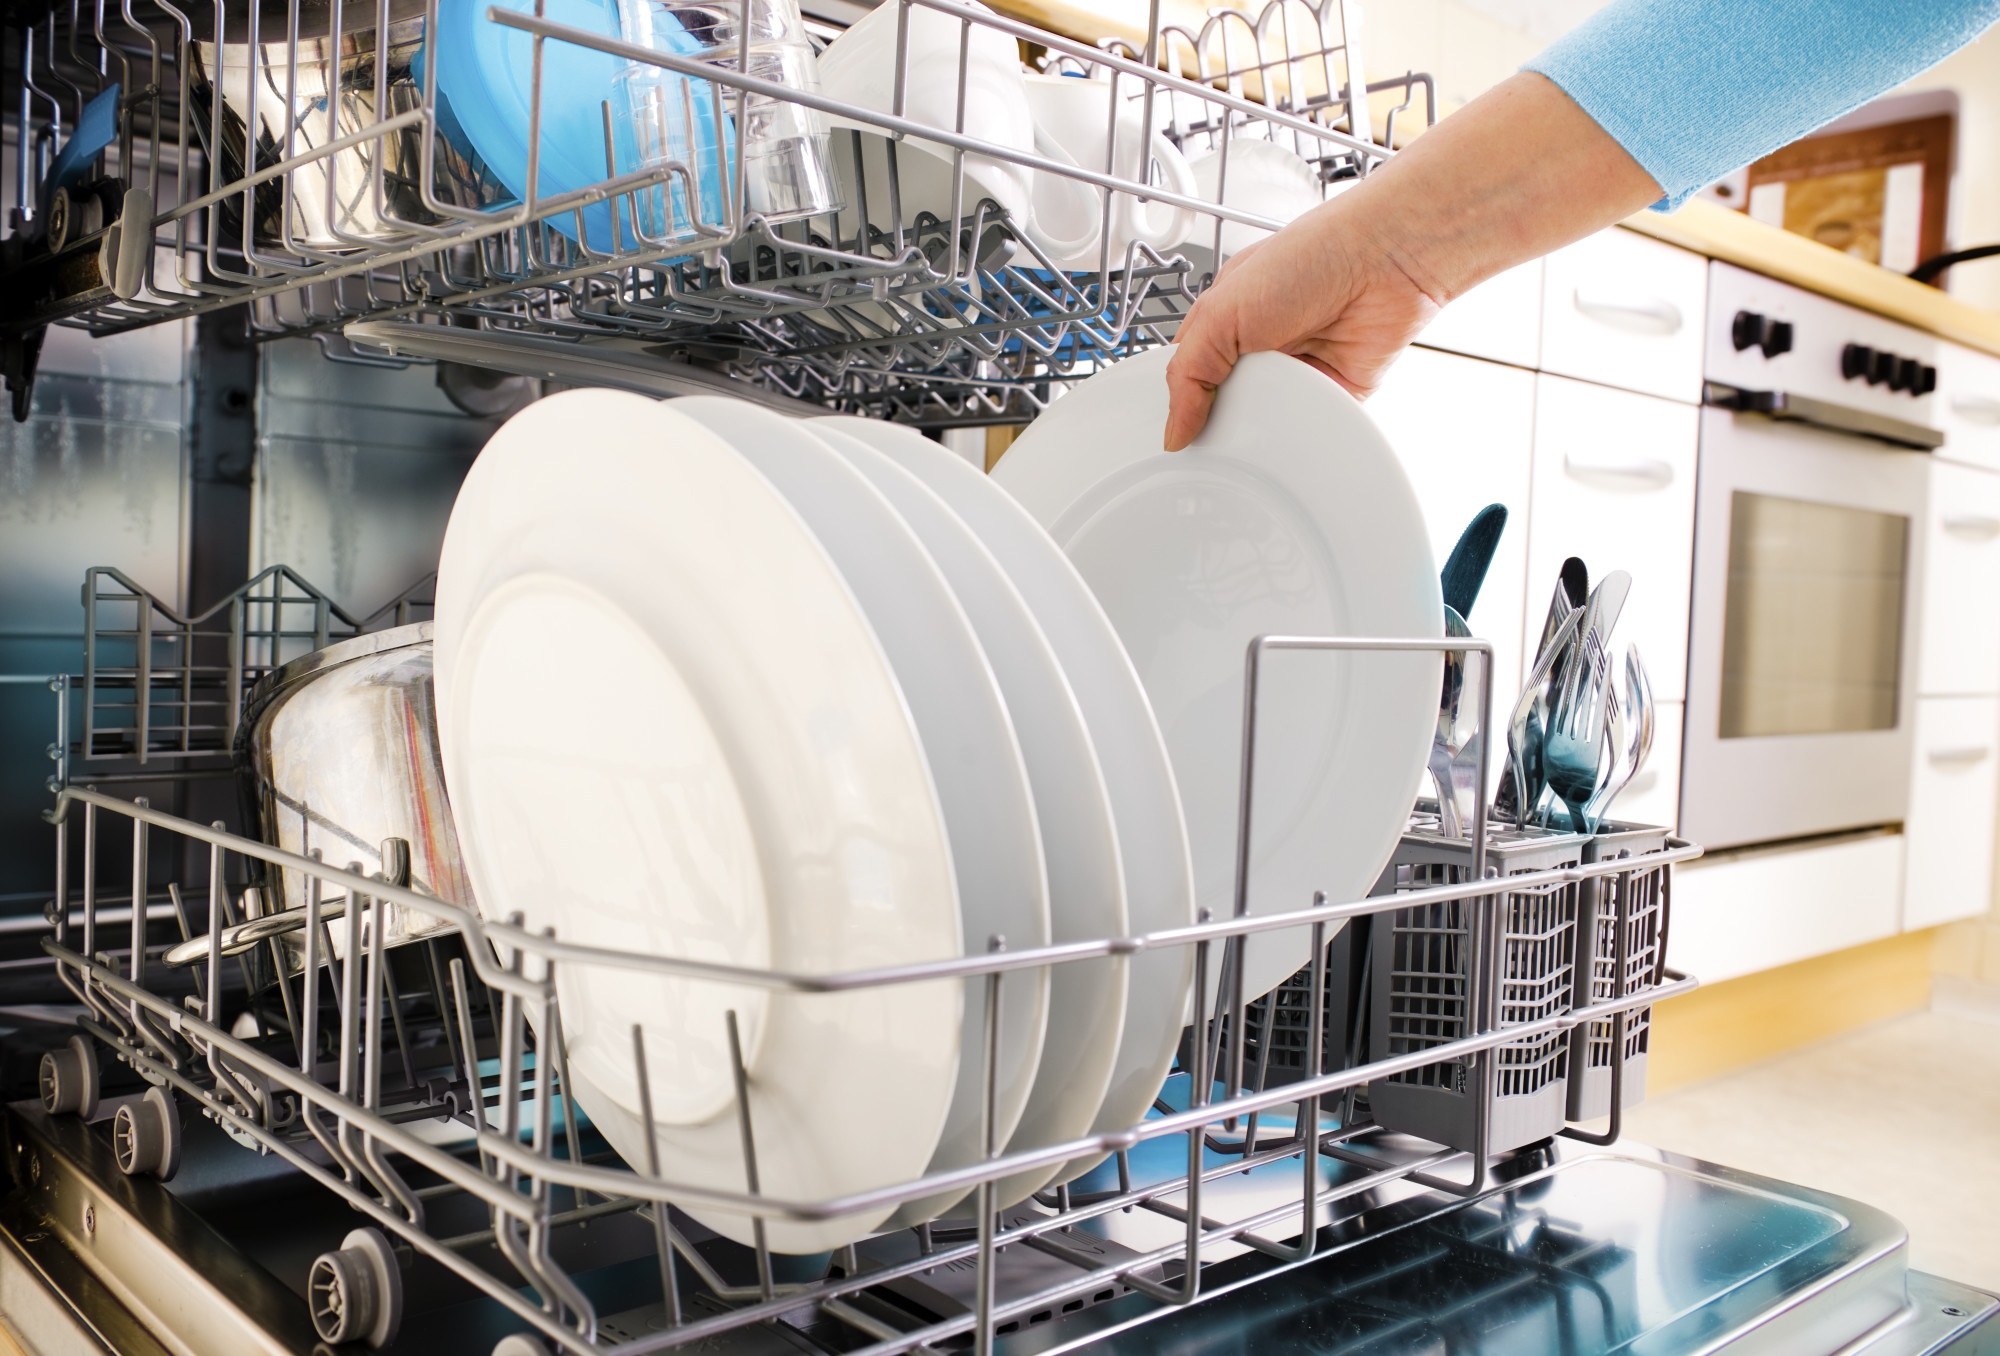 5 Best Ways to Keep Dishwashers Clean